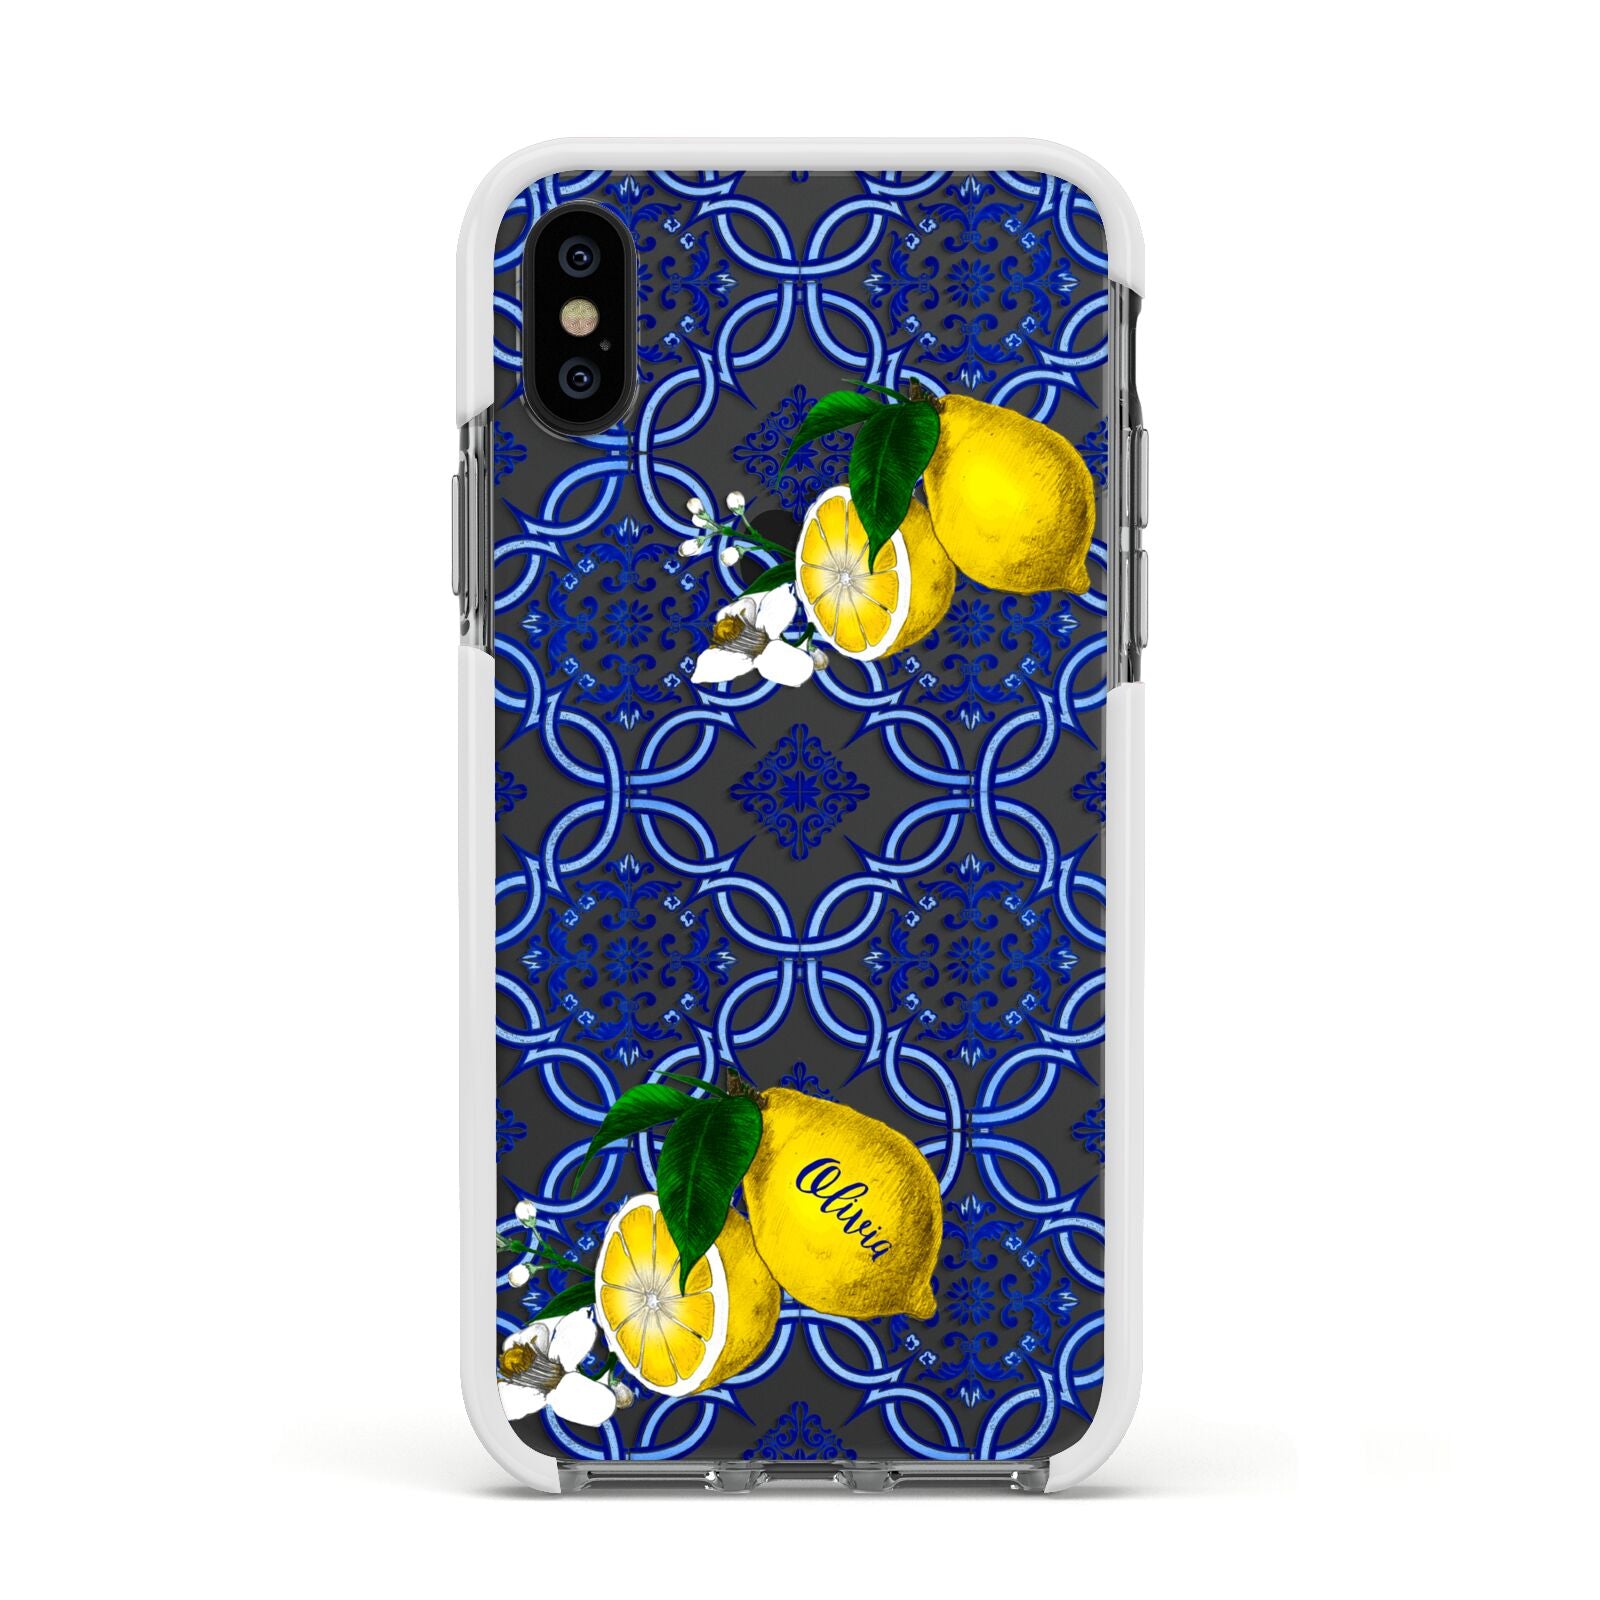 Personalised Mediterranean Tiles and Lemons Apple iPhone Xs Impact Case White Edge on Black Phone